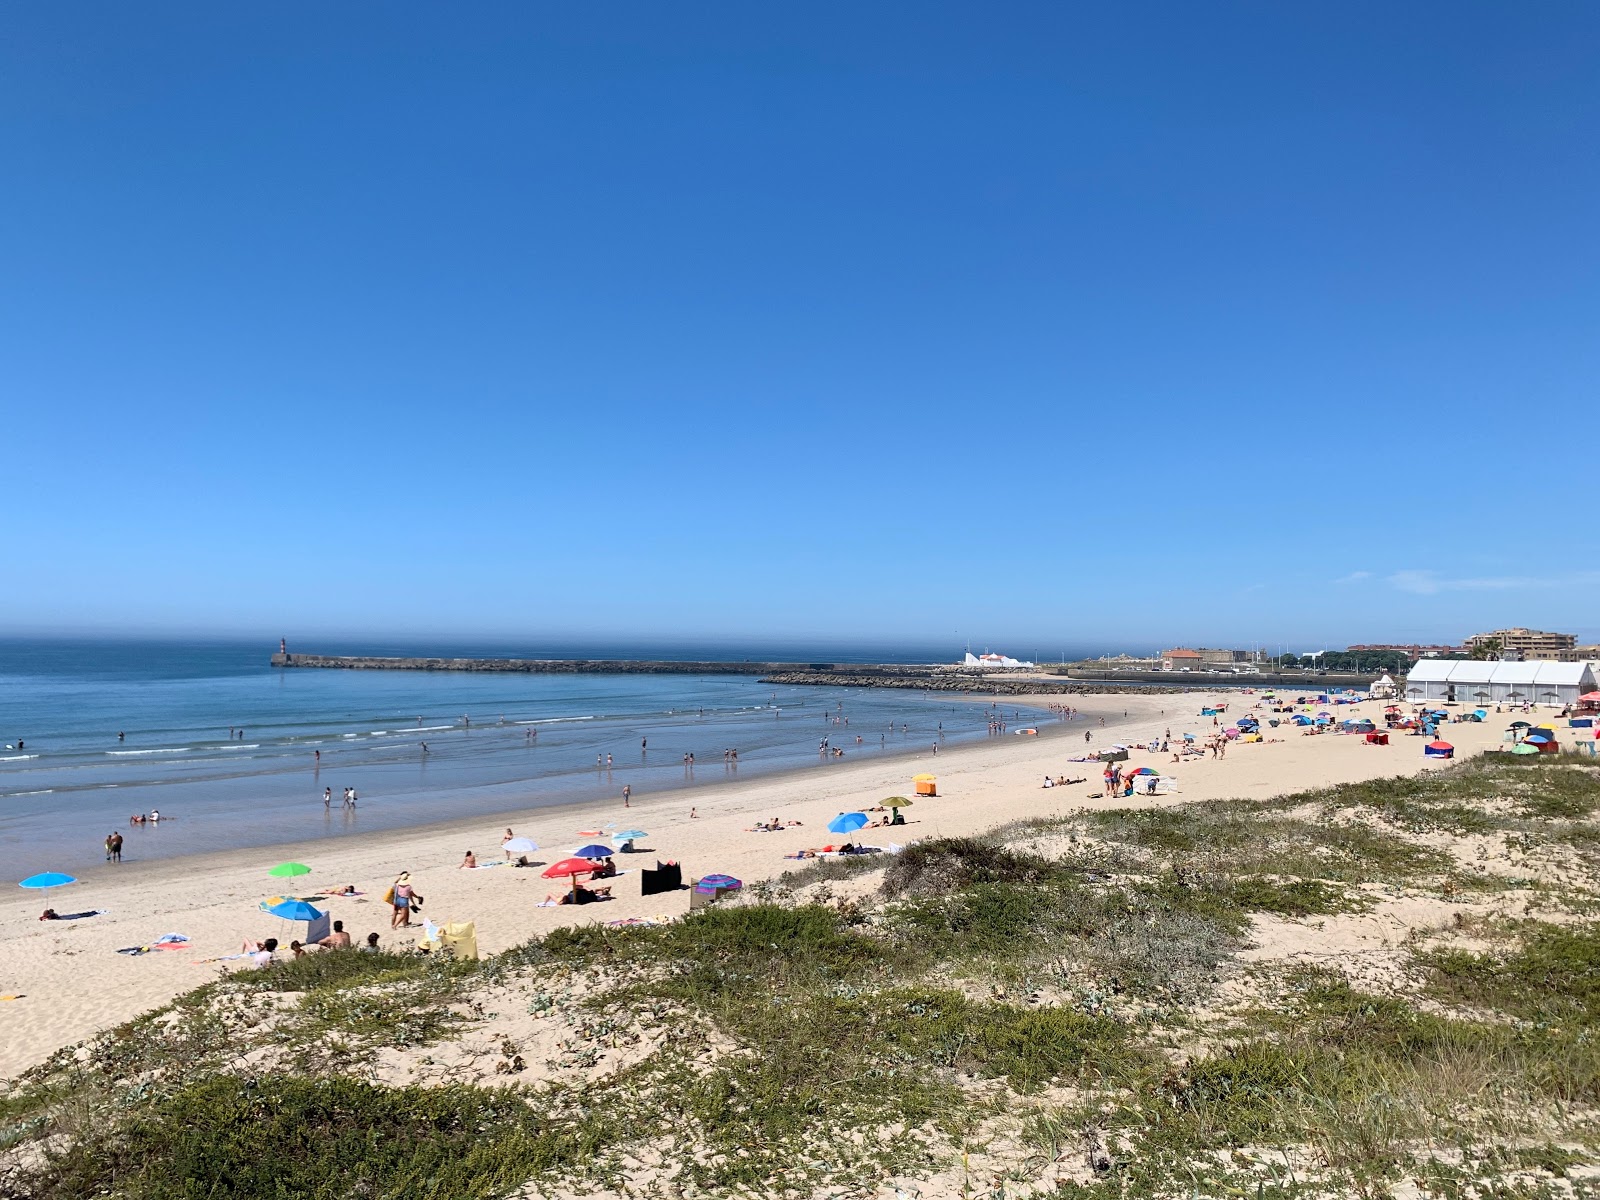 Fotografie cu Praia da Azurara cu o suprafață de apa albastra